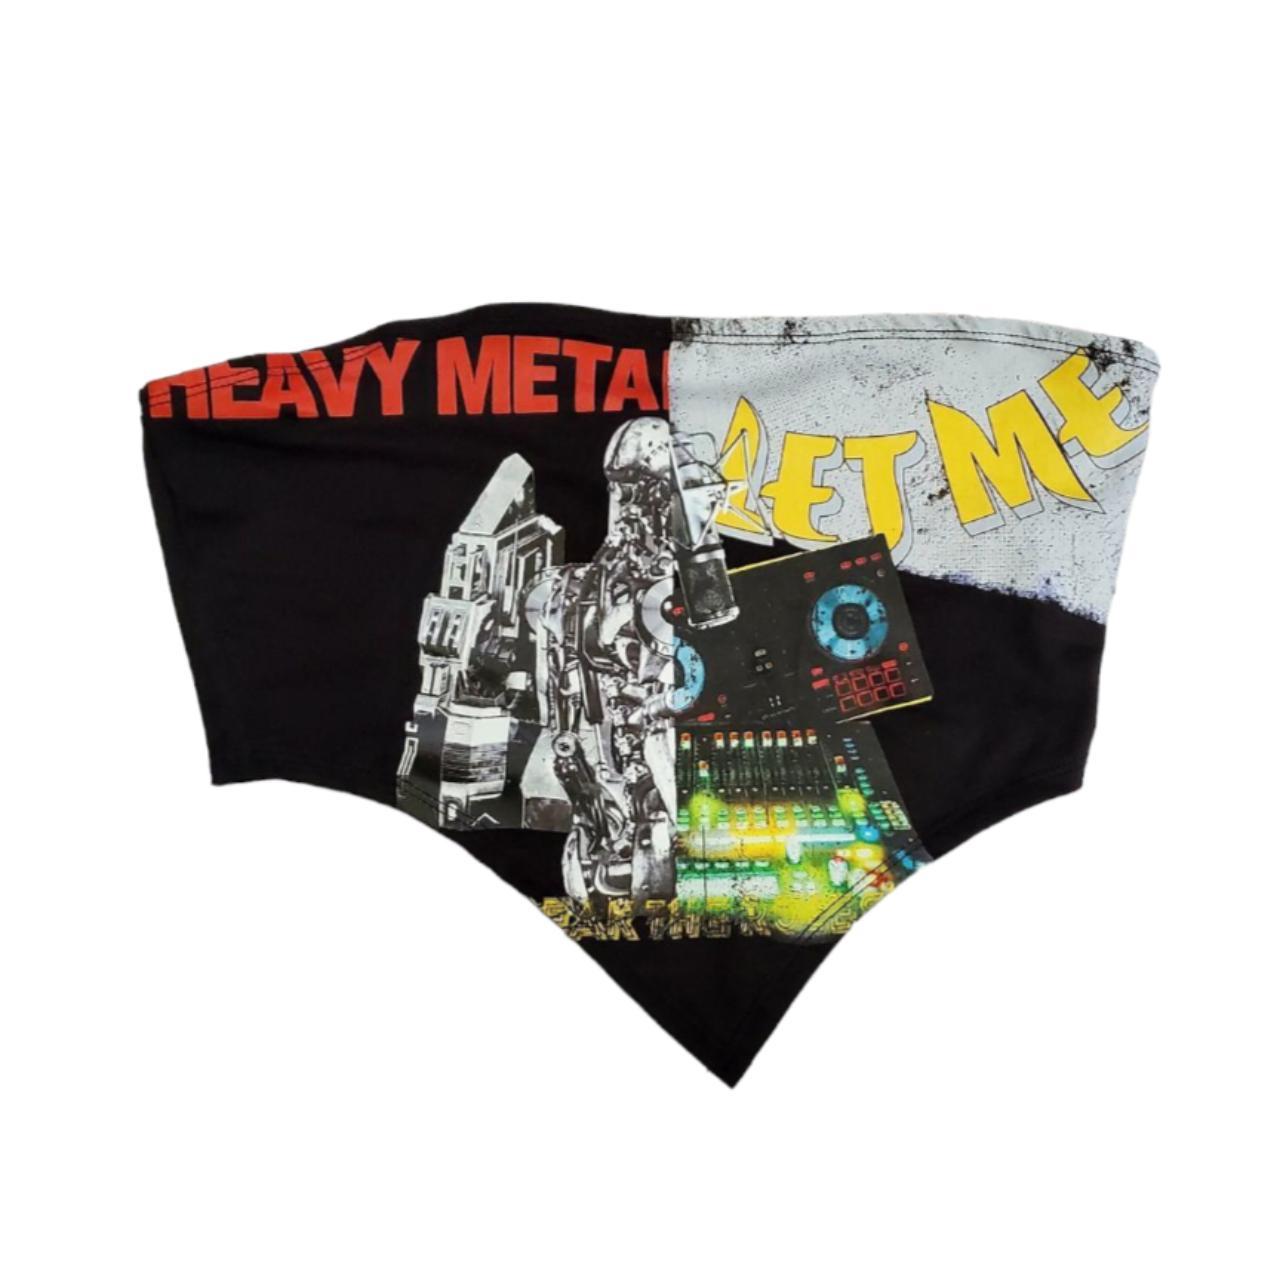 Heavy Metal Underwear